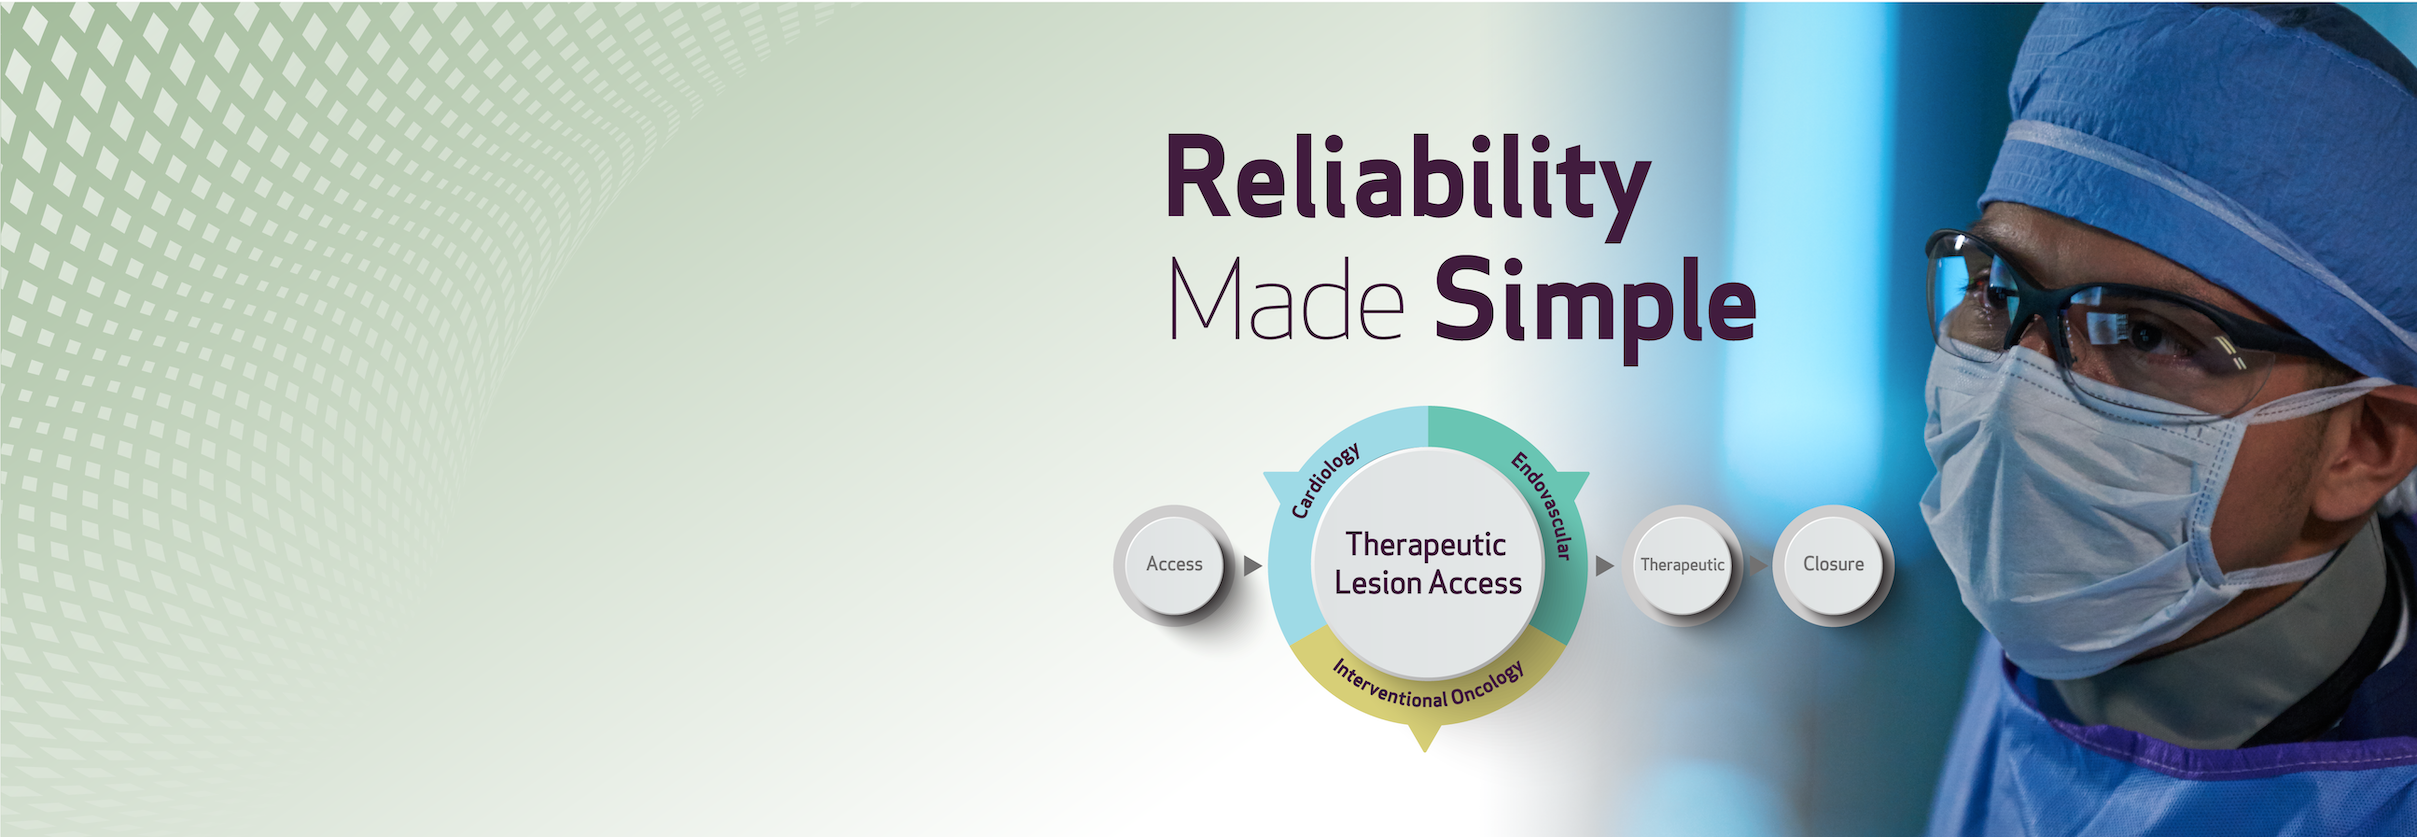 Reliability made simple - Theraputic Lesion Access (TLA) (image)